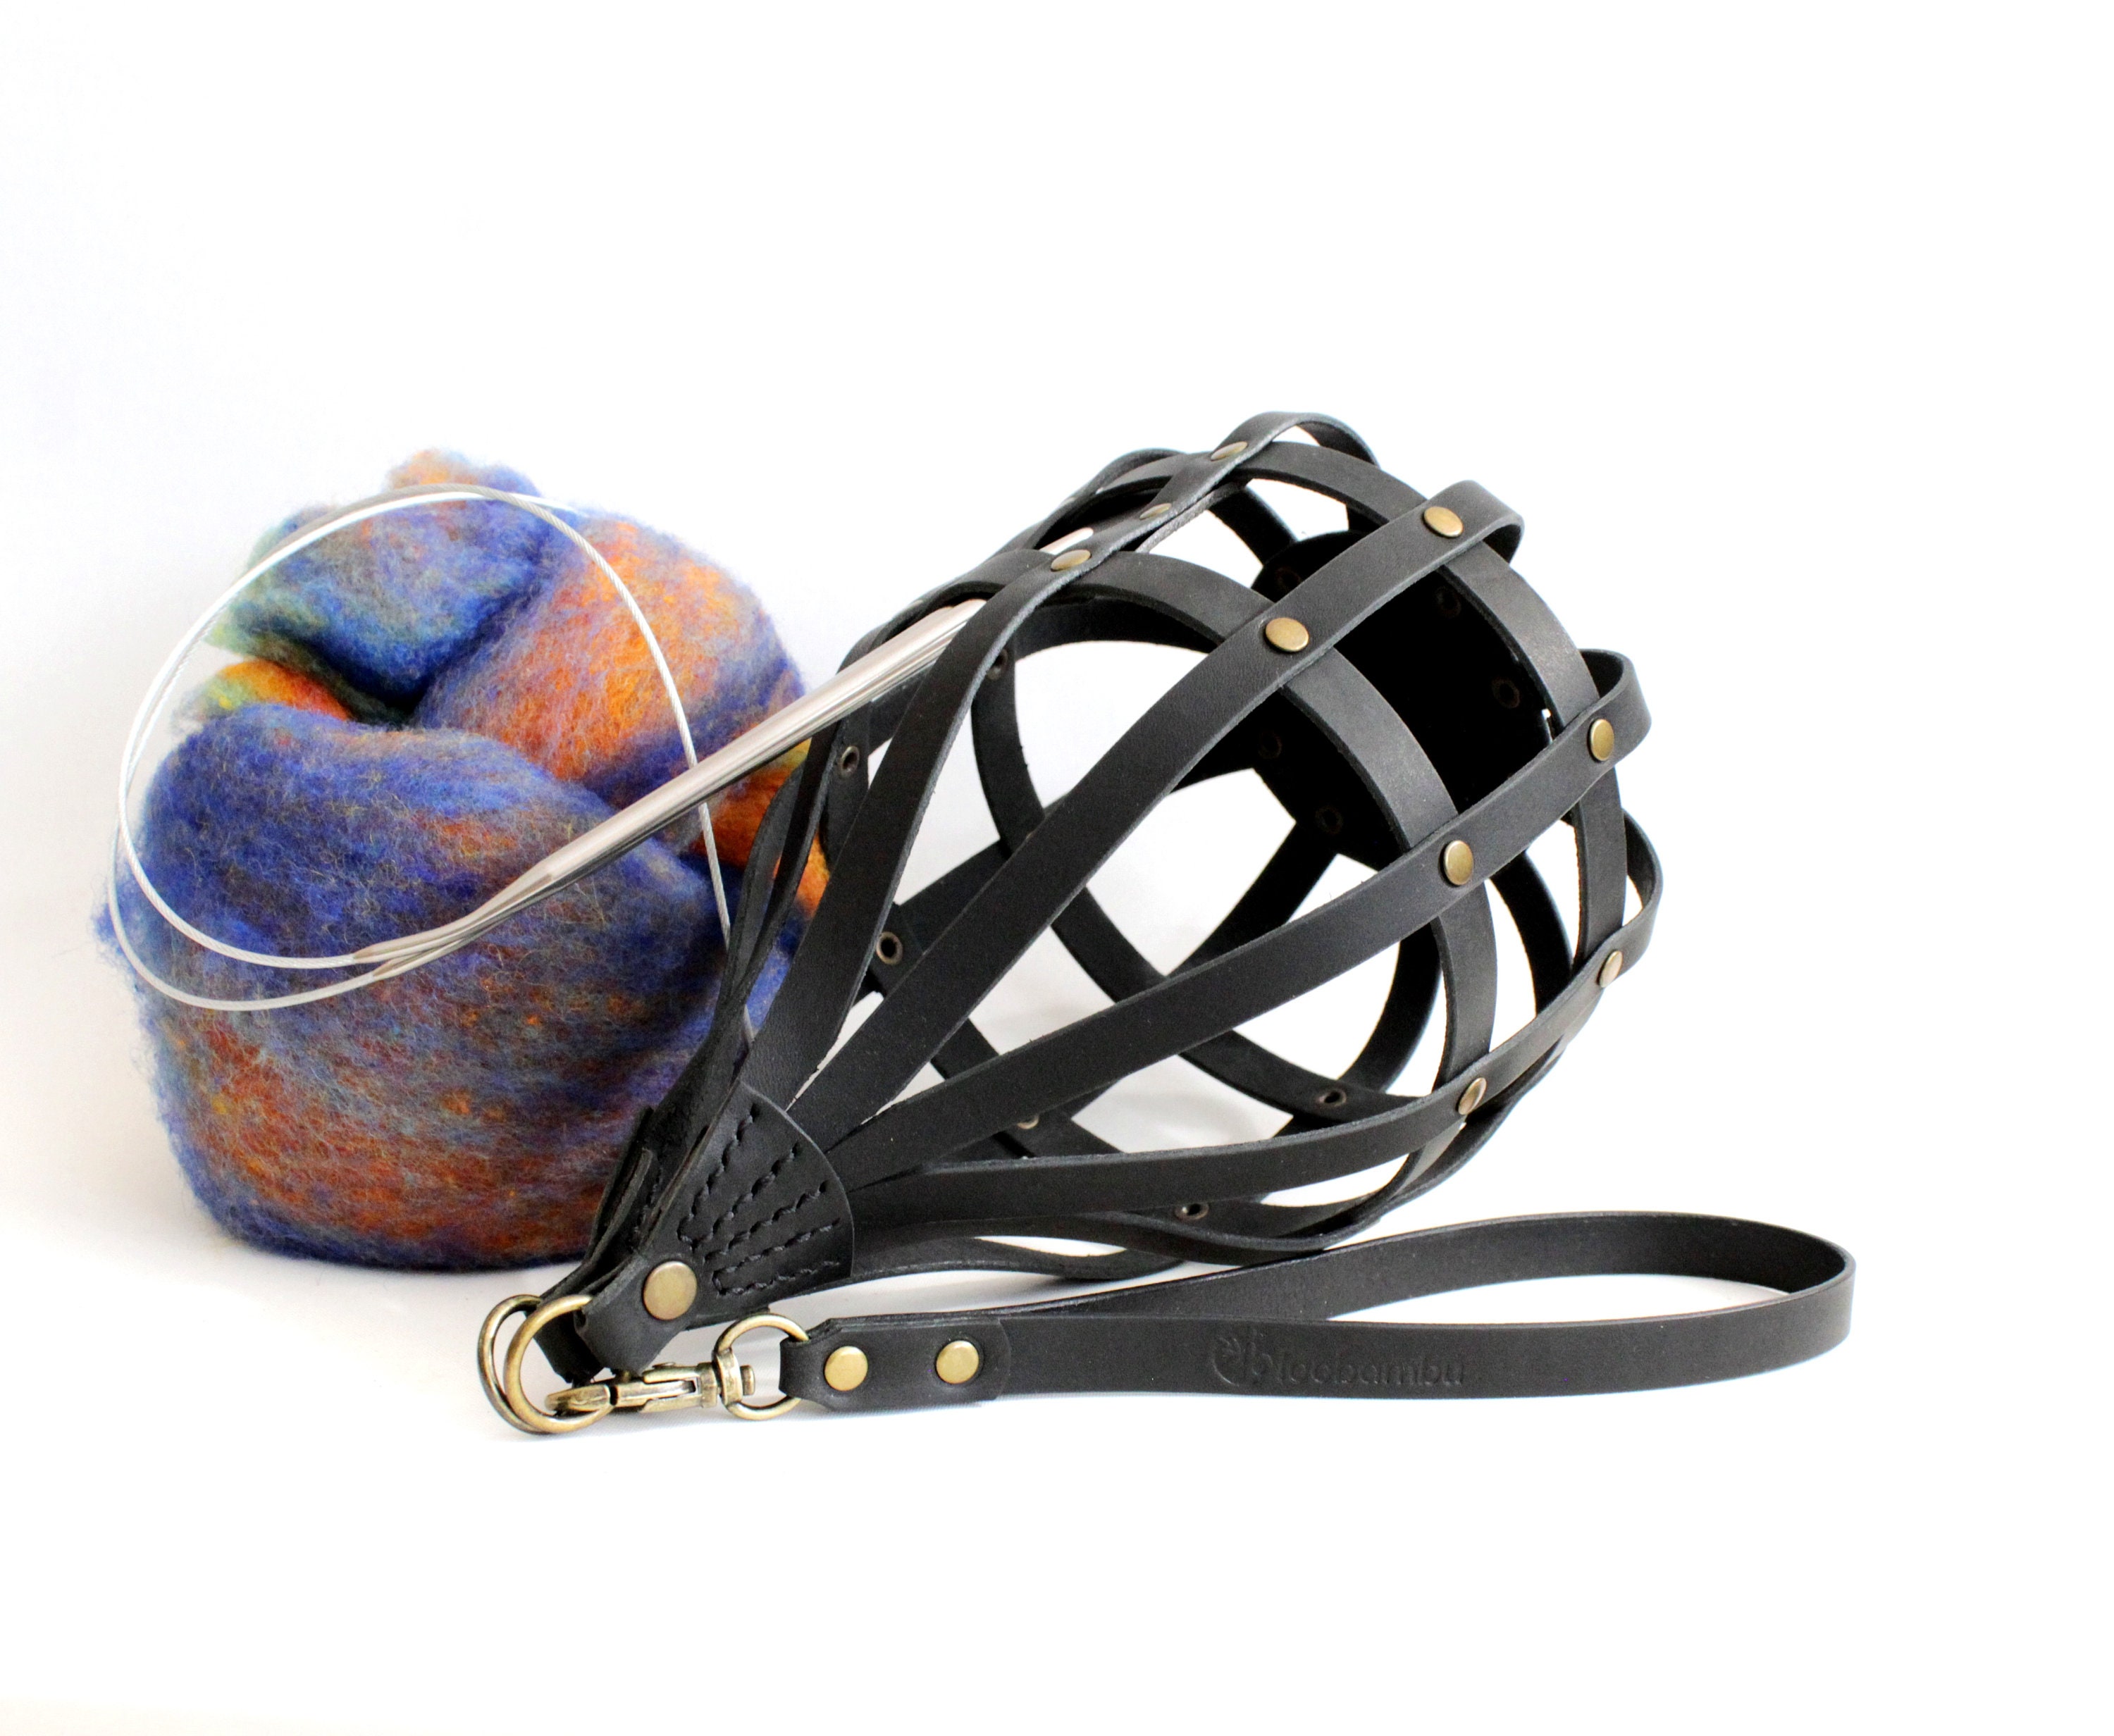 Stylish Leather Yarn Holder, Handmade Leather Knitting Project Bag